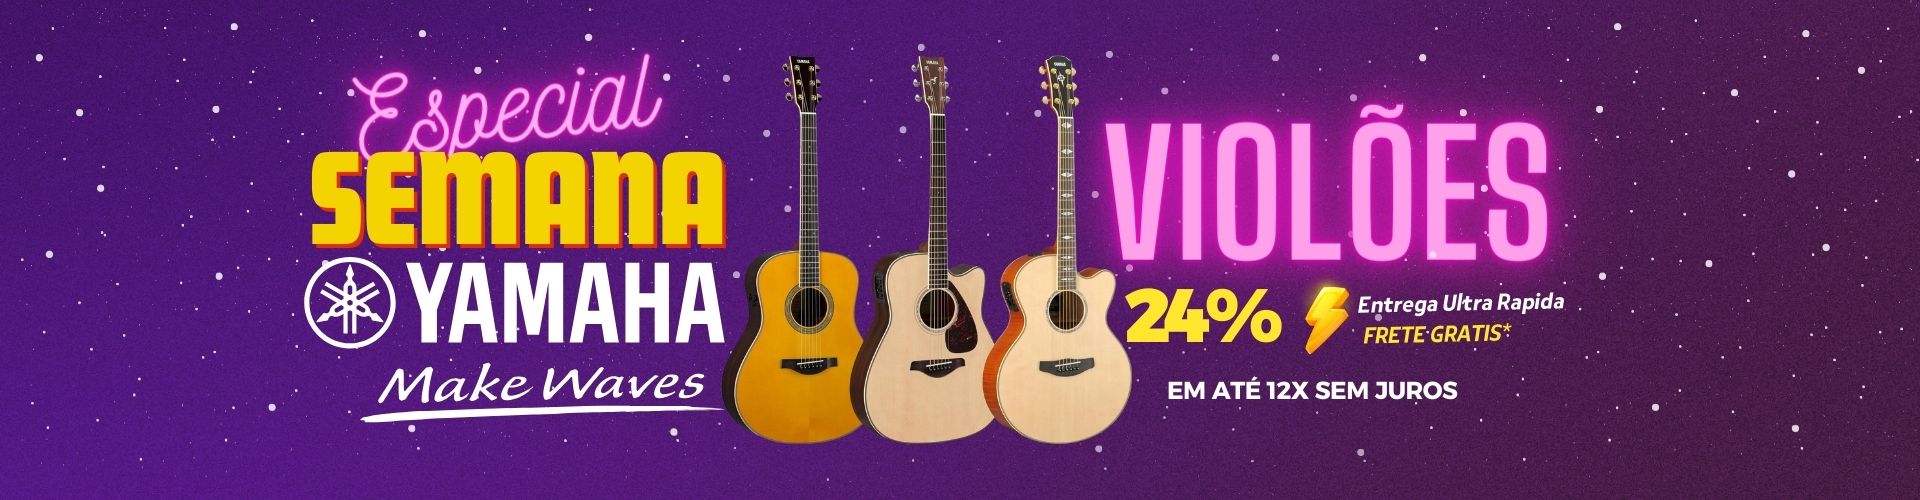 Violões Yamaha